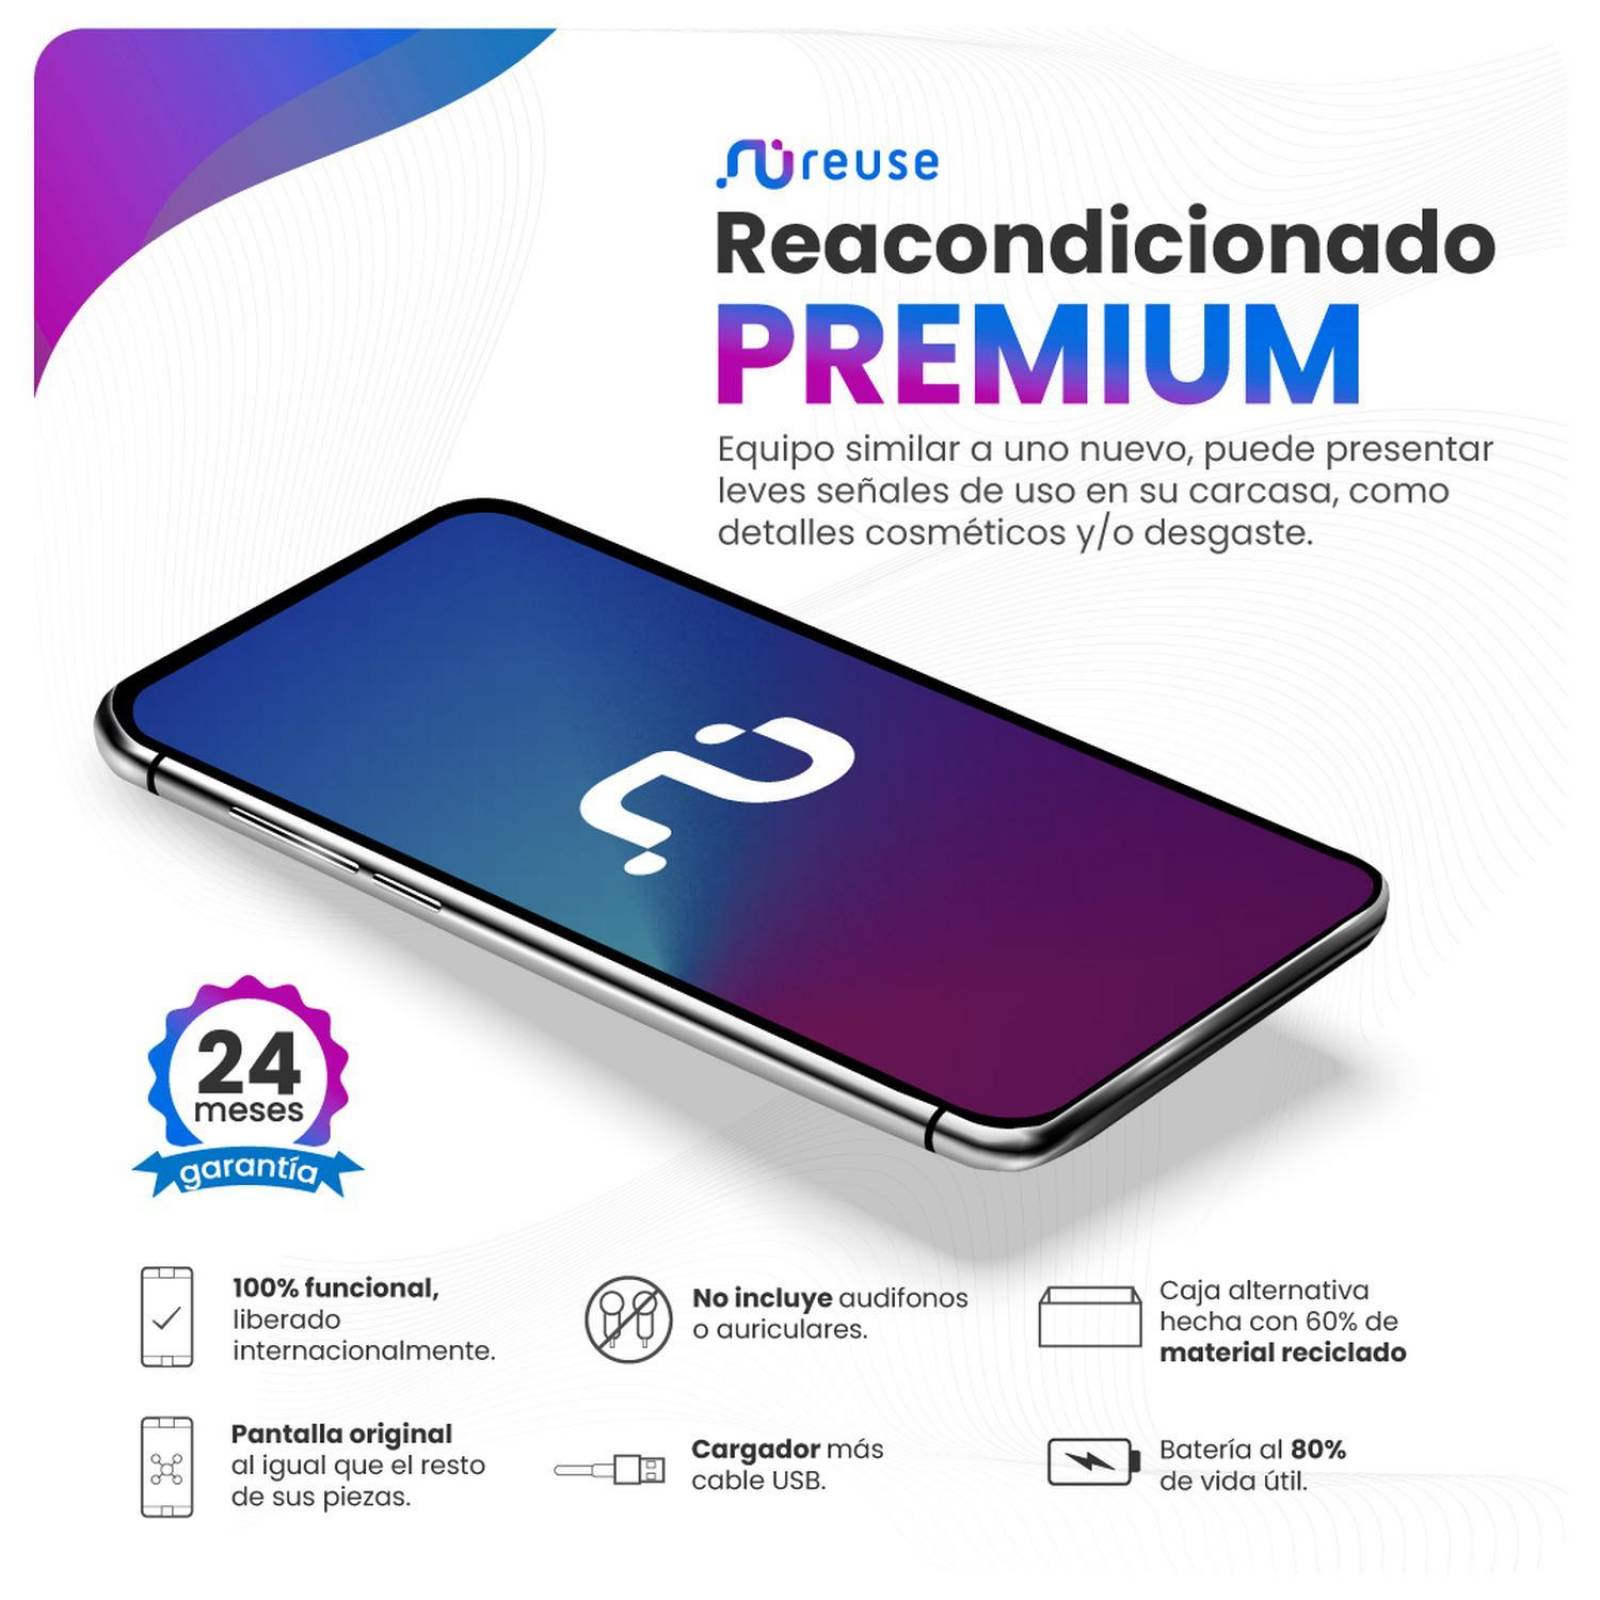 Samsung S21 Ultra, 512gb, 5G, Preto - Celulares e telefonia - Aerolândia,  Fortaleza 1240759515